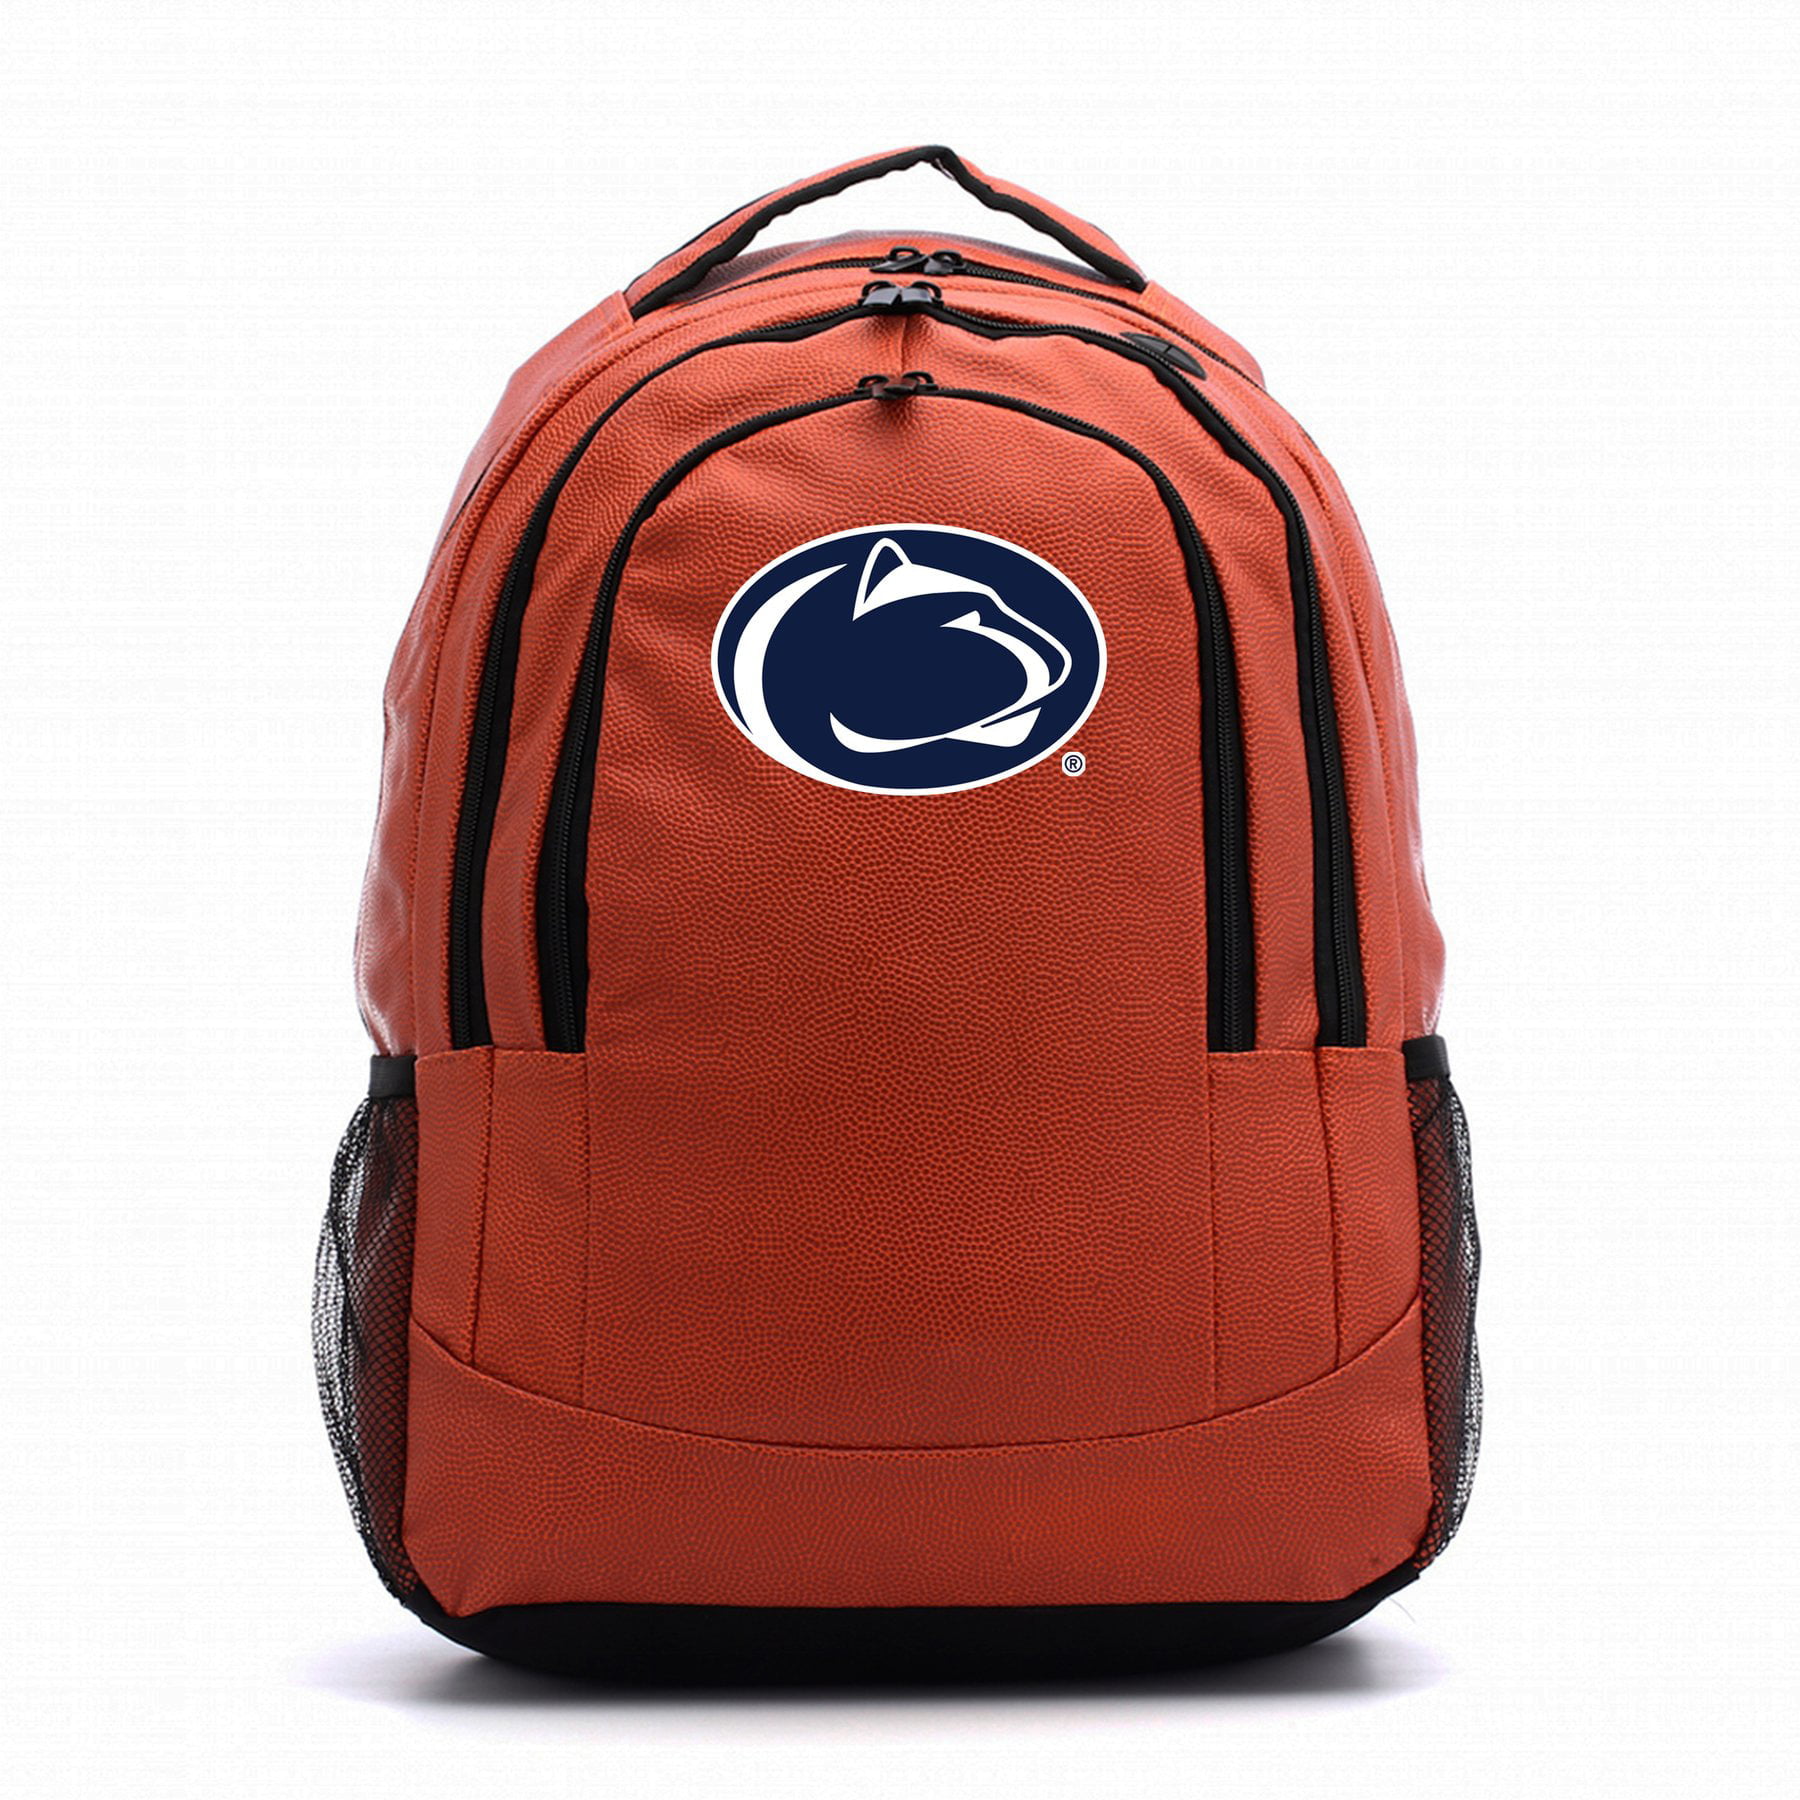 AdSpec NCAA Fan Shop Collegiate Valuables Bag 